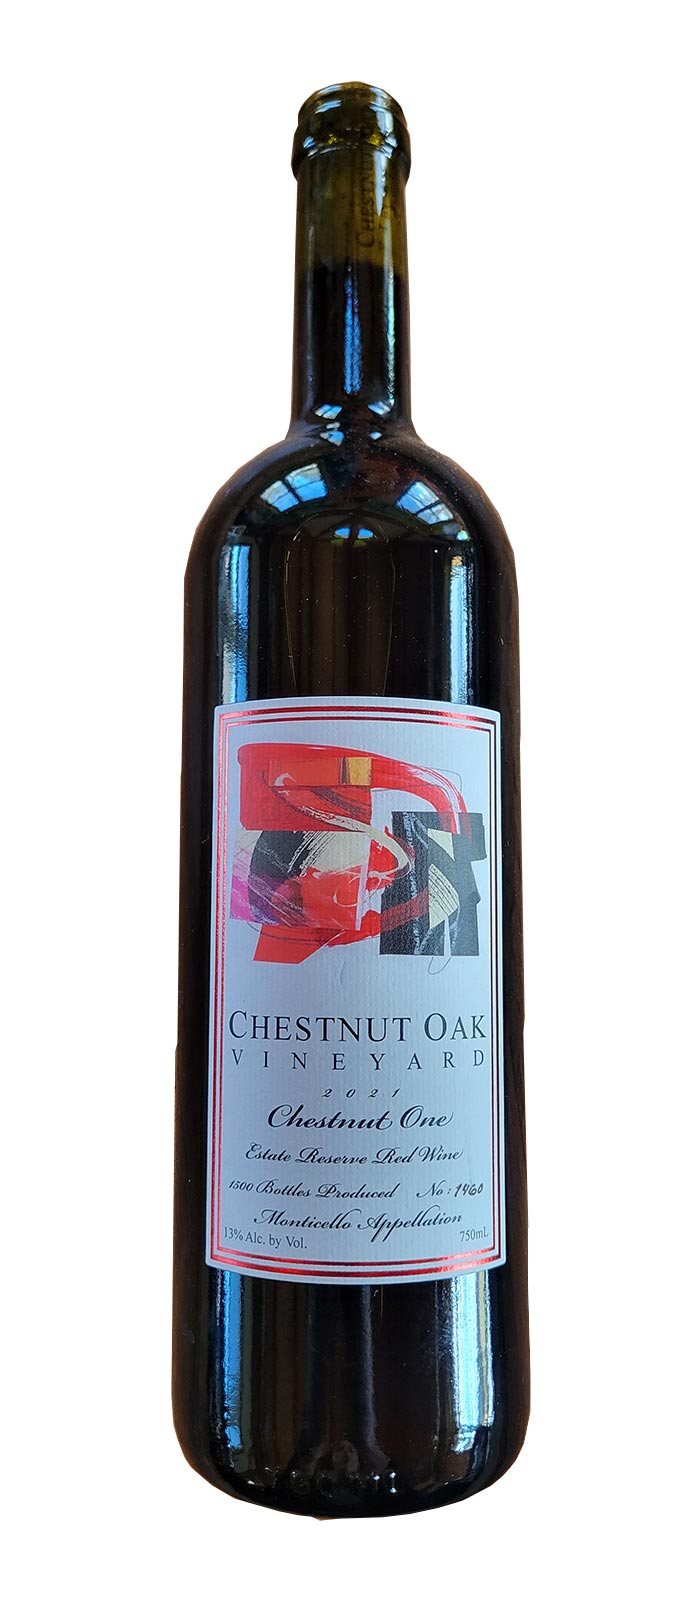 Bottle of Chestnut Oak Vineyard 2021 Chestnut One, Gold Medal, Virginia Governor's Cup Wine Competition.